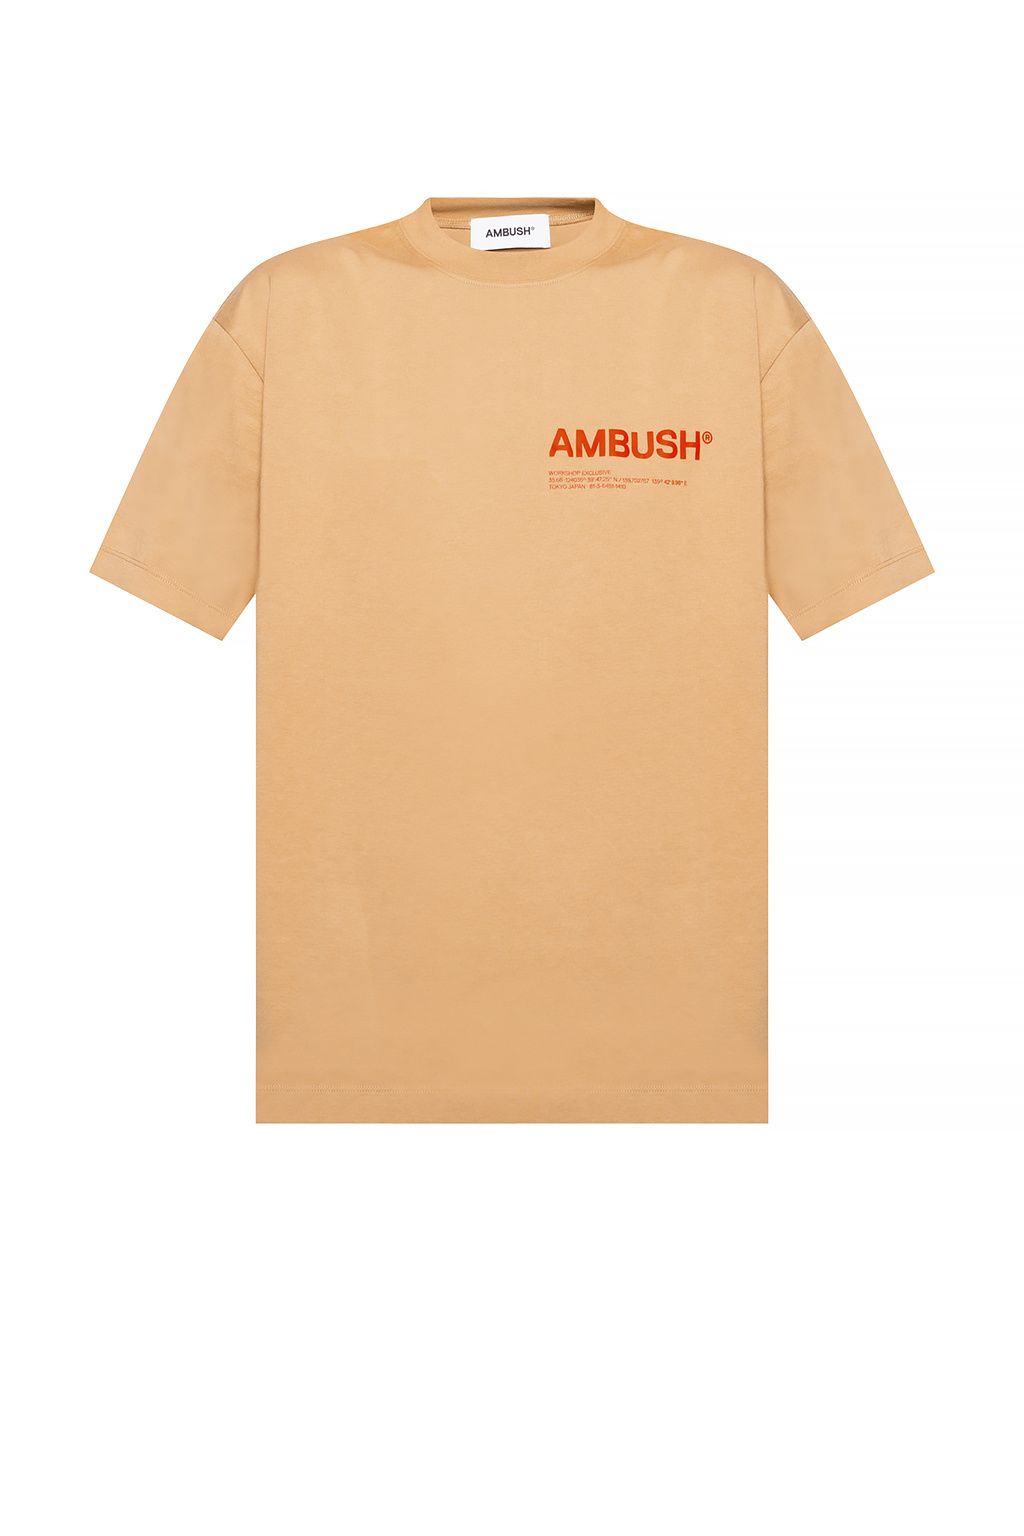 Ambush Heritage mens lifestyle plaid button-down SMITH shirt